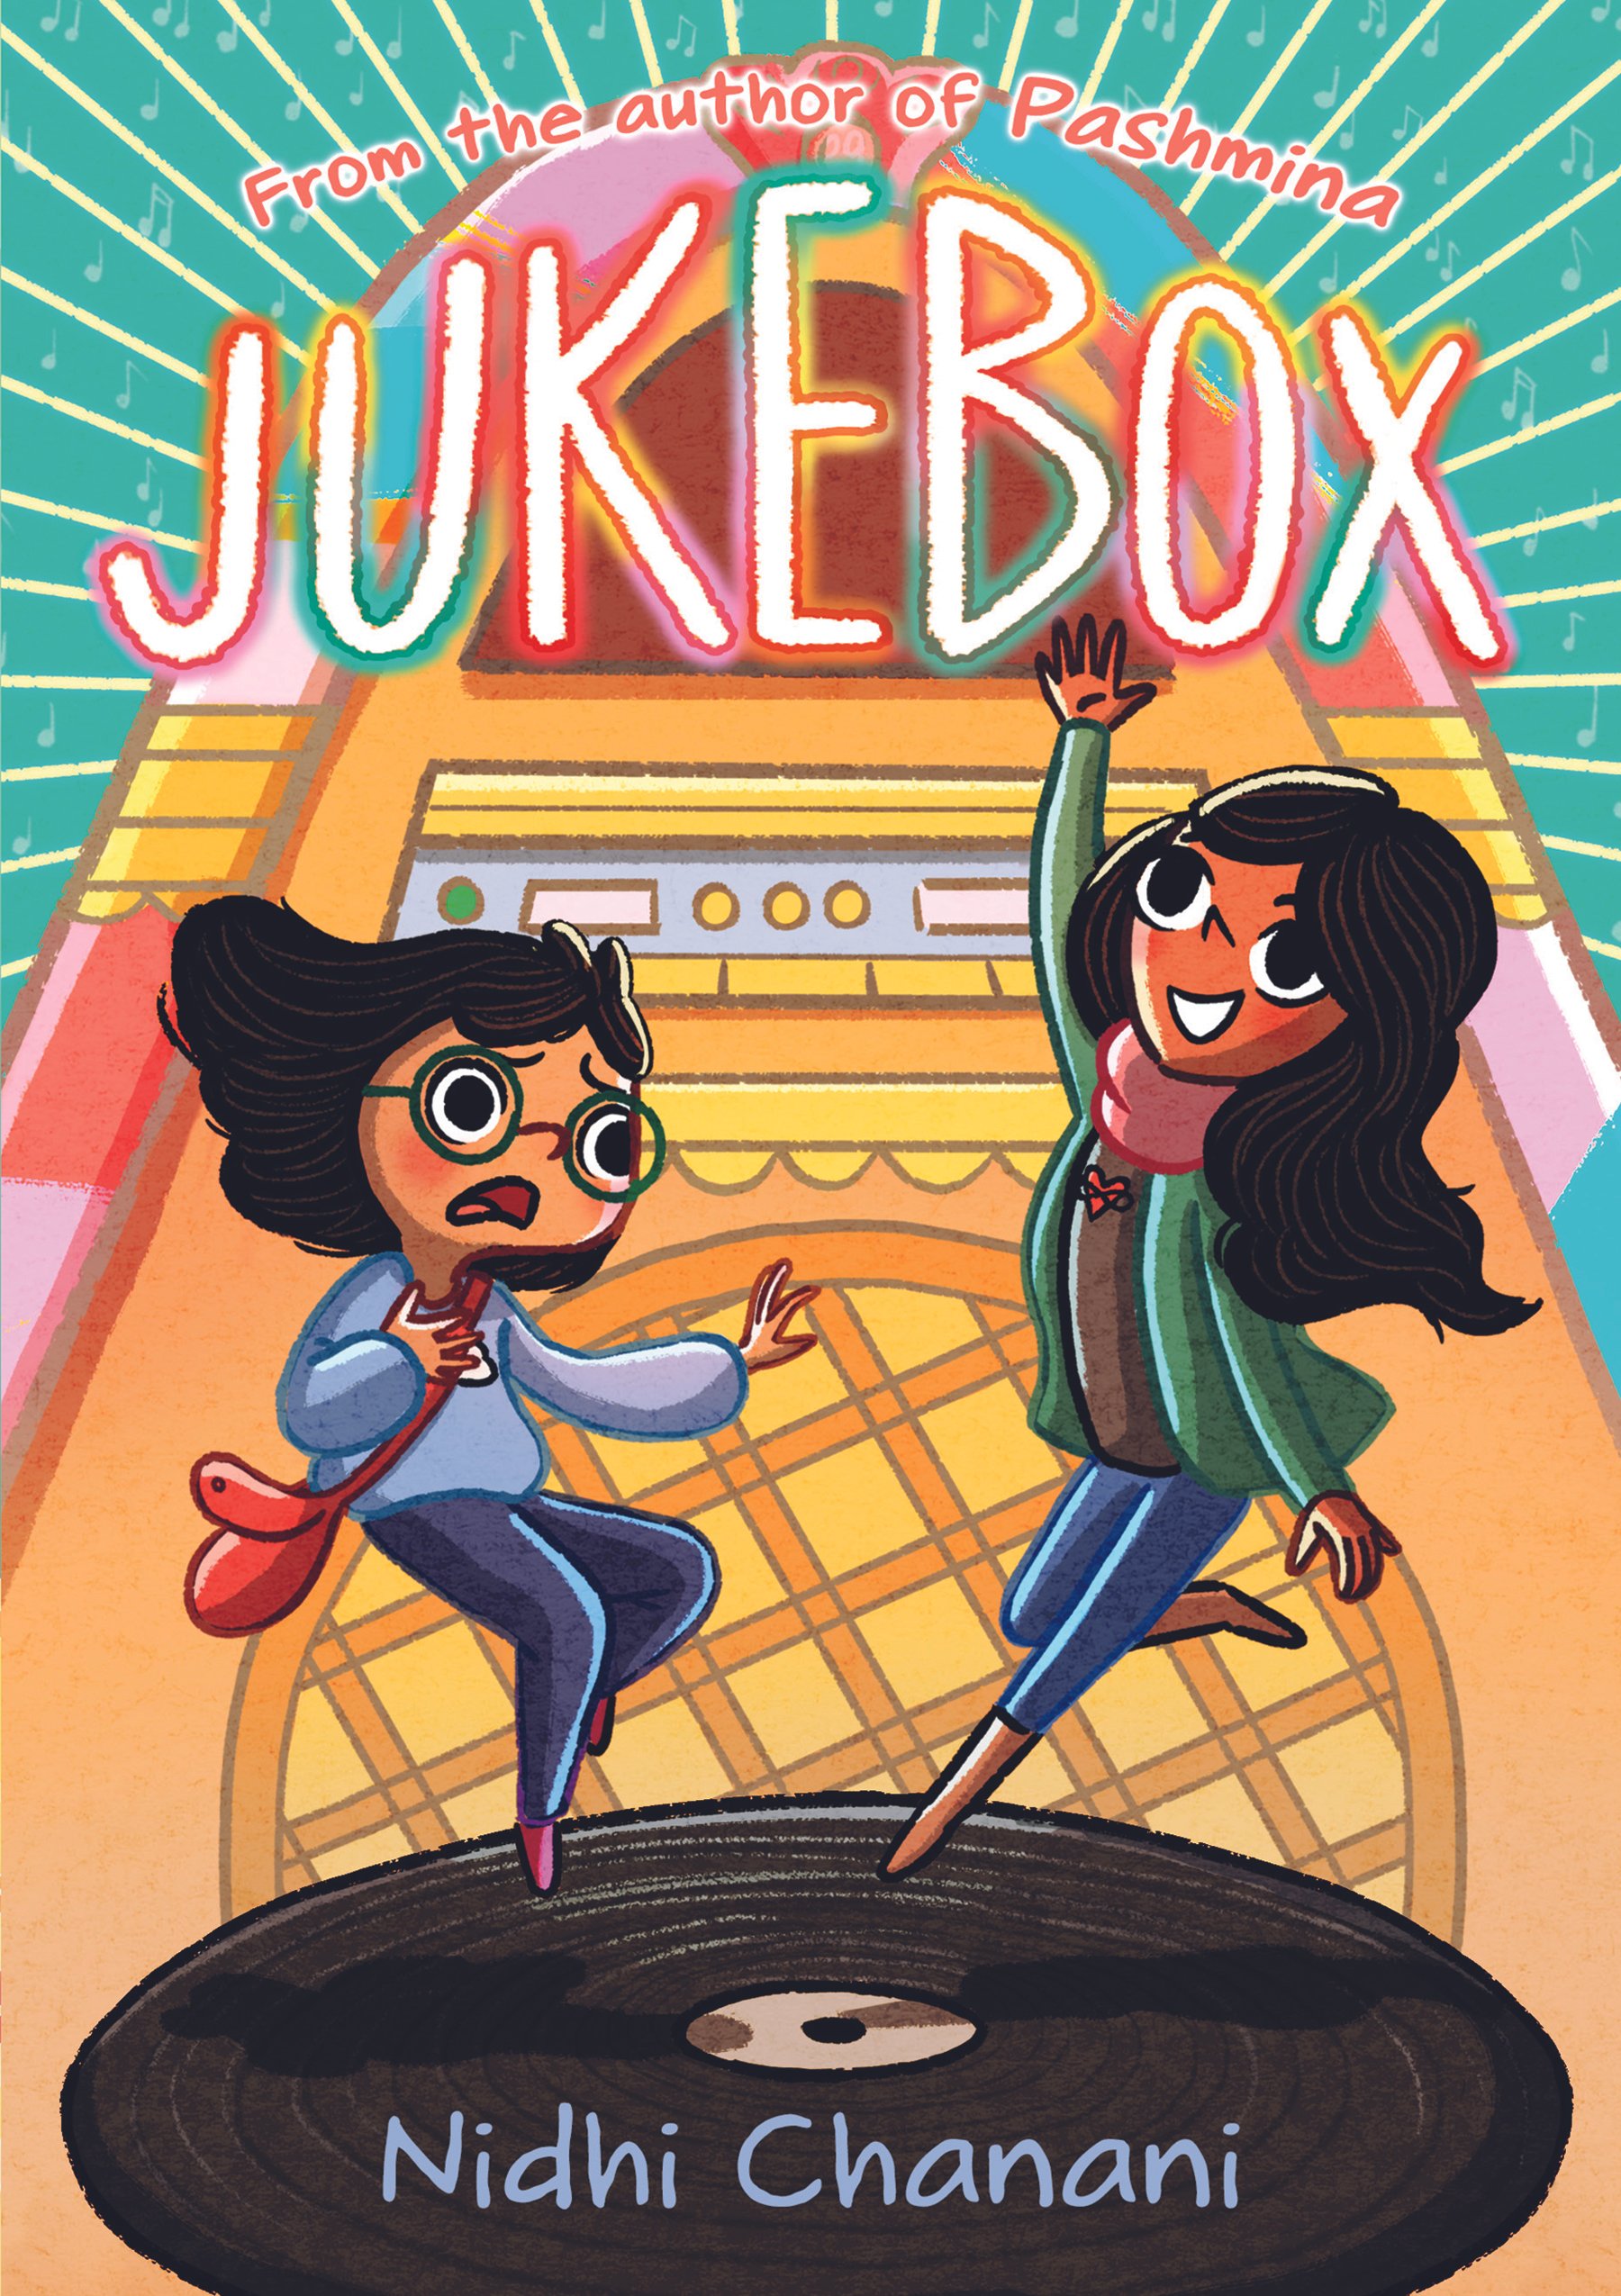 Jukebox_cover.jpg